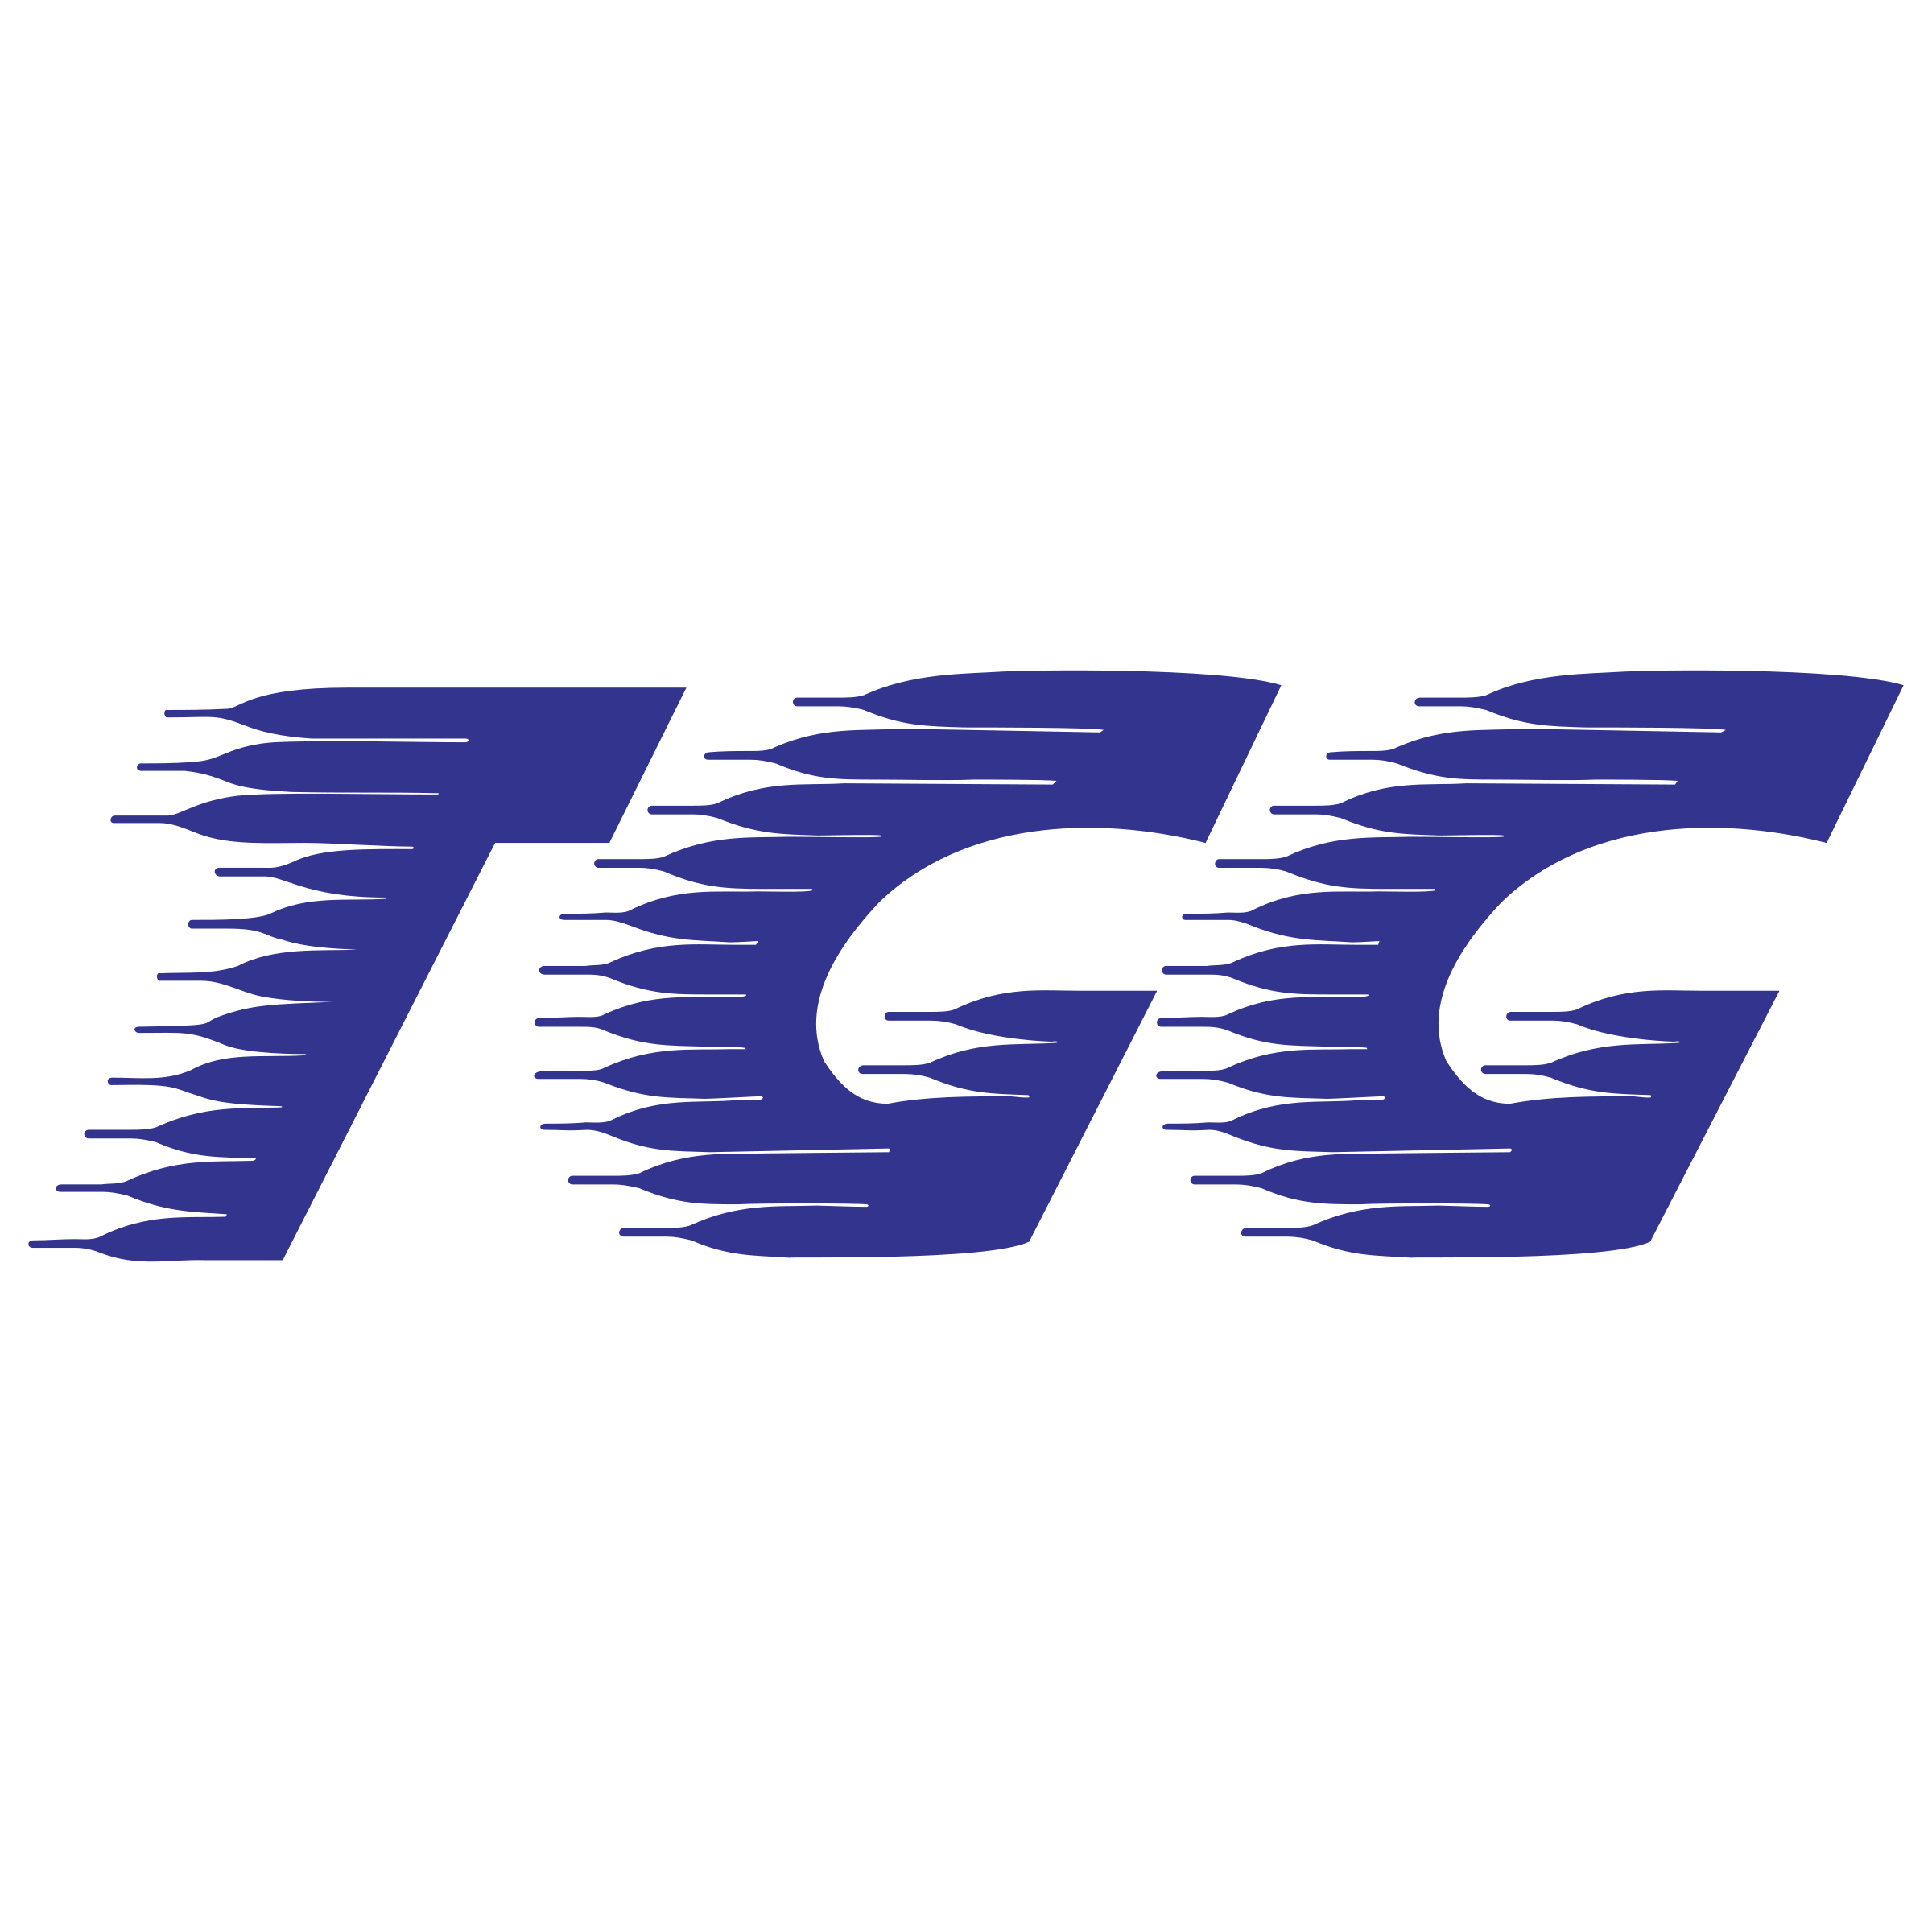 TGG Logo - TGG Logo PNG Transparent & SVG Vector - Freebie Supply